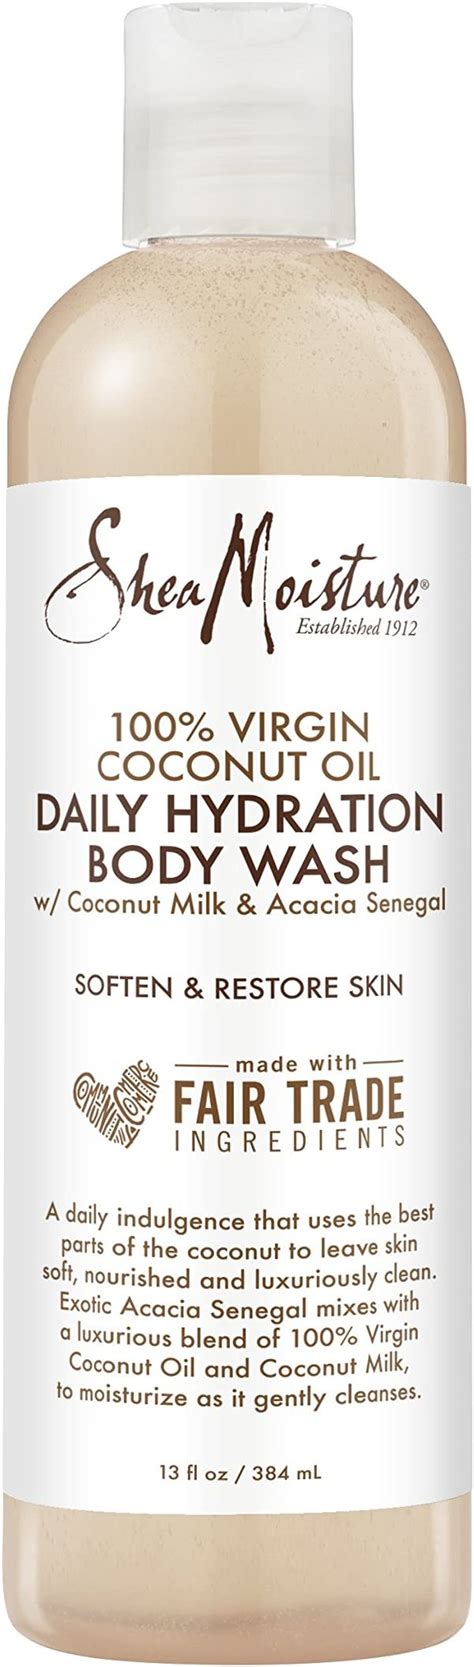 Shea Moisture 100 Virgin Coconut Oil Daily Hydration Body